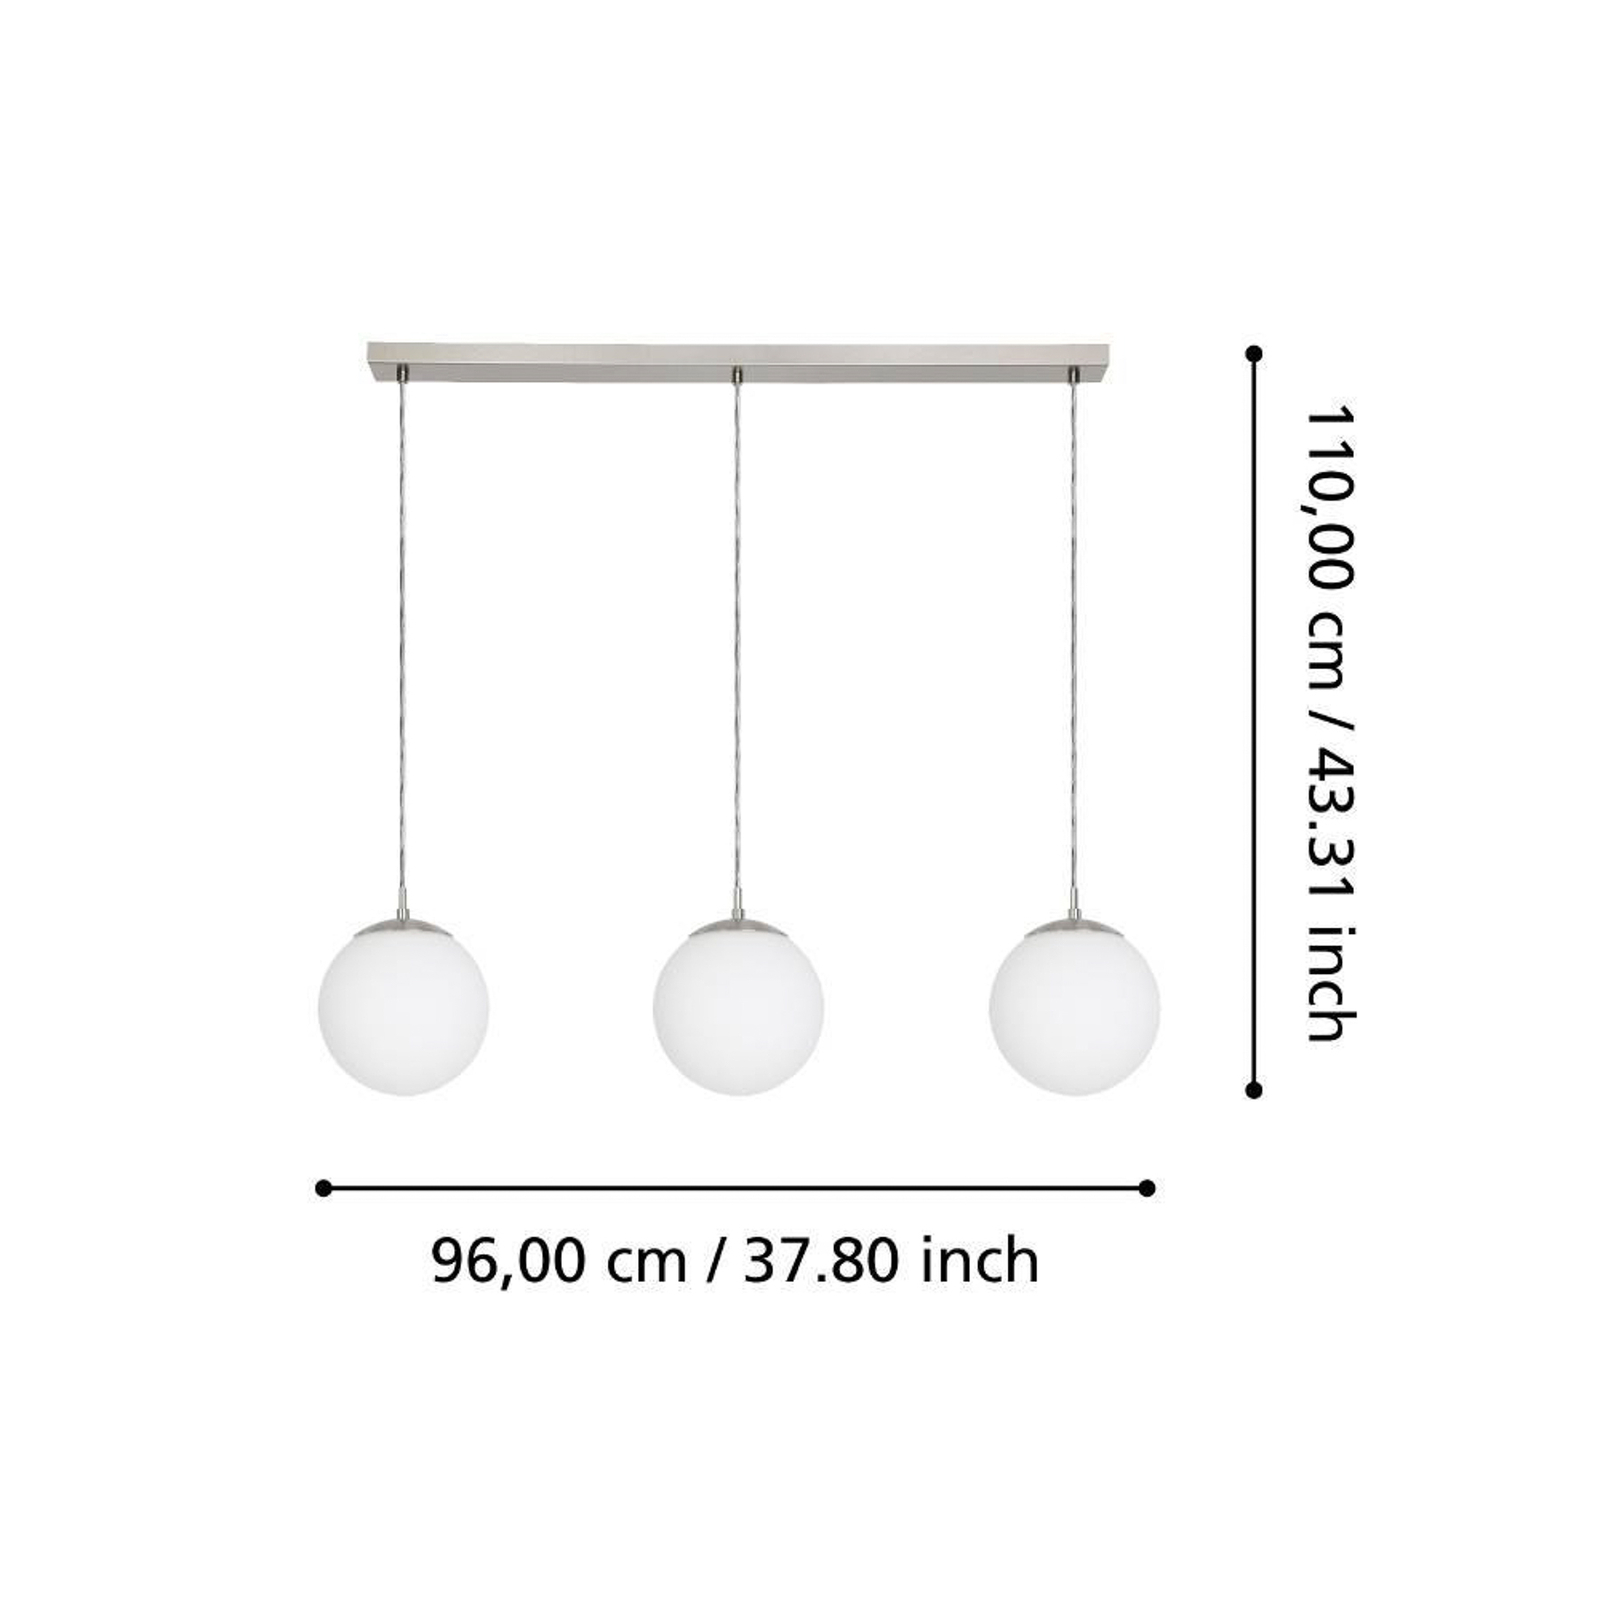 EGLO Rondo pendant light, three-bulb, nickel/white